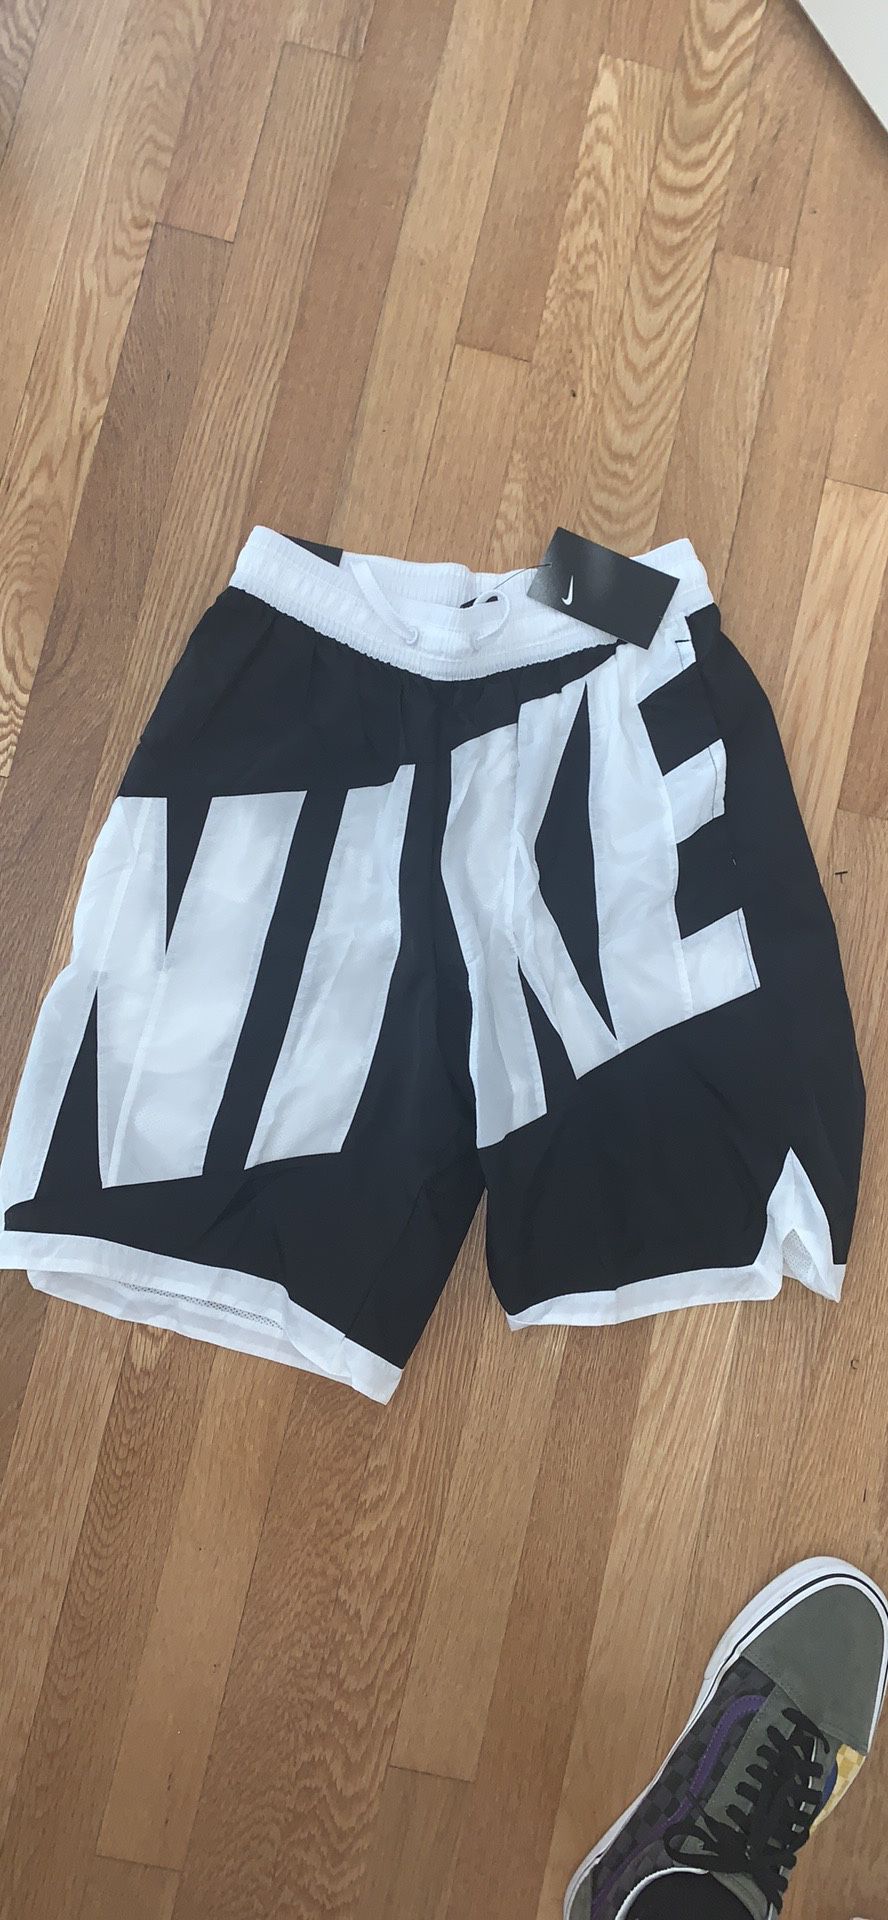 Men’s Nike basketball shorts size medium brand new!!